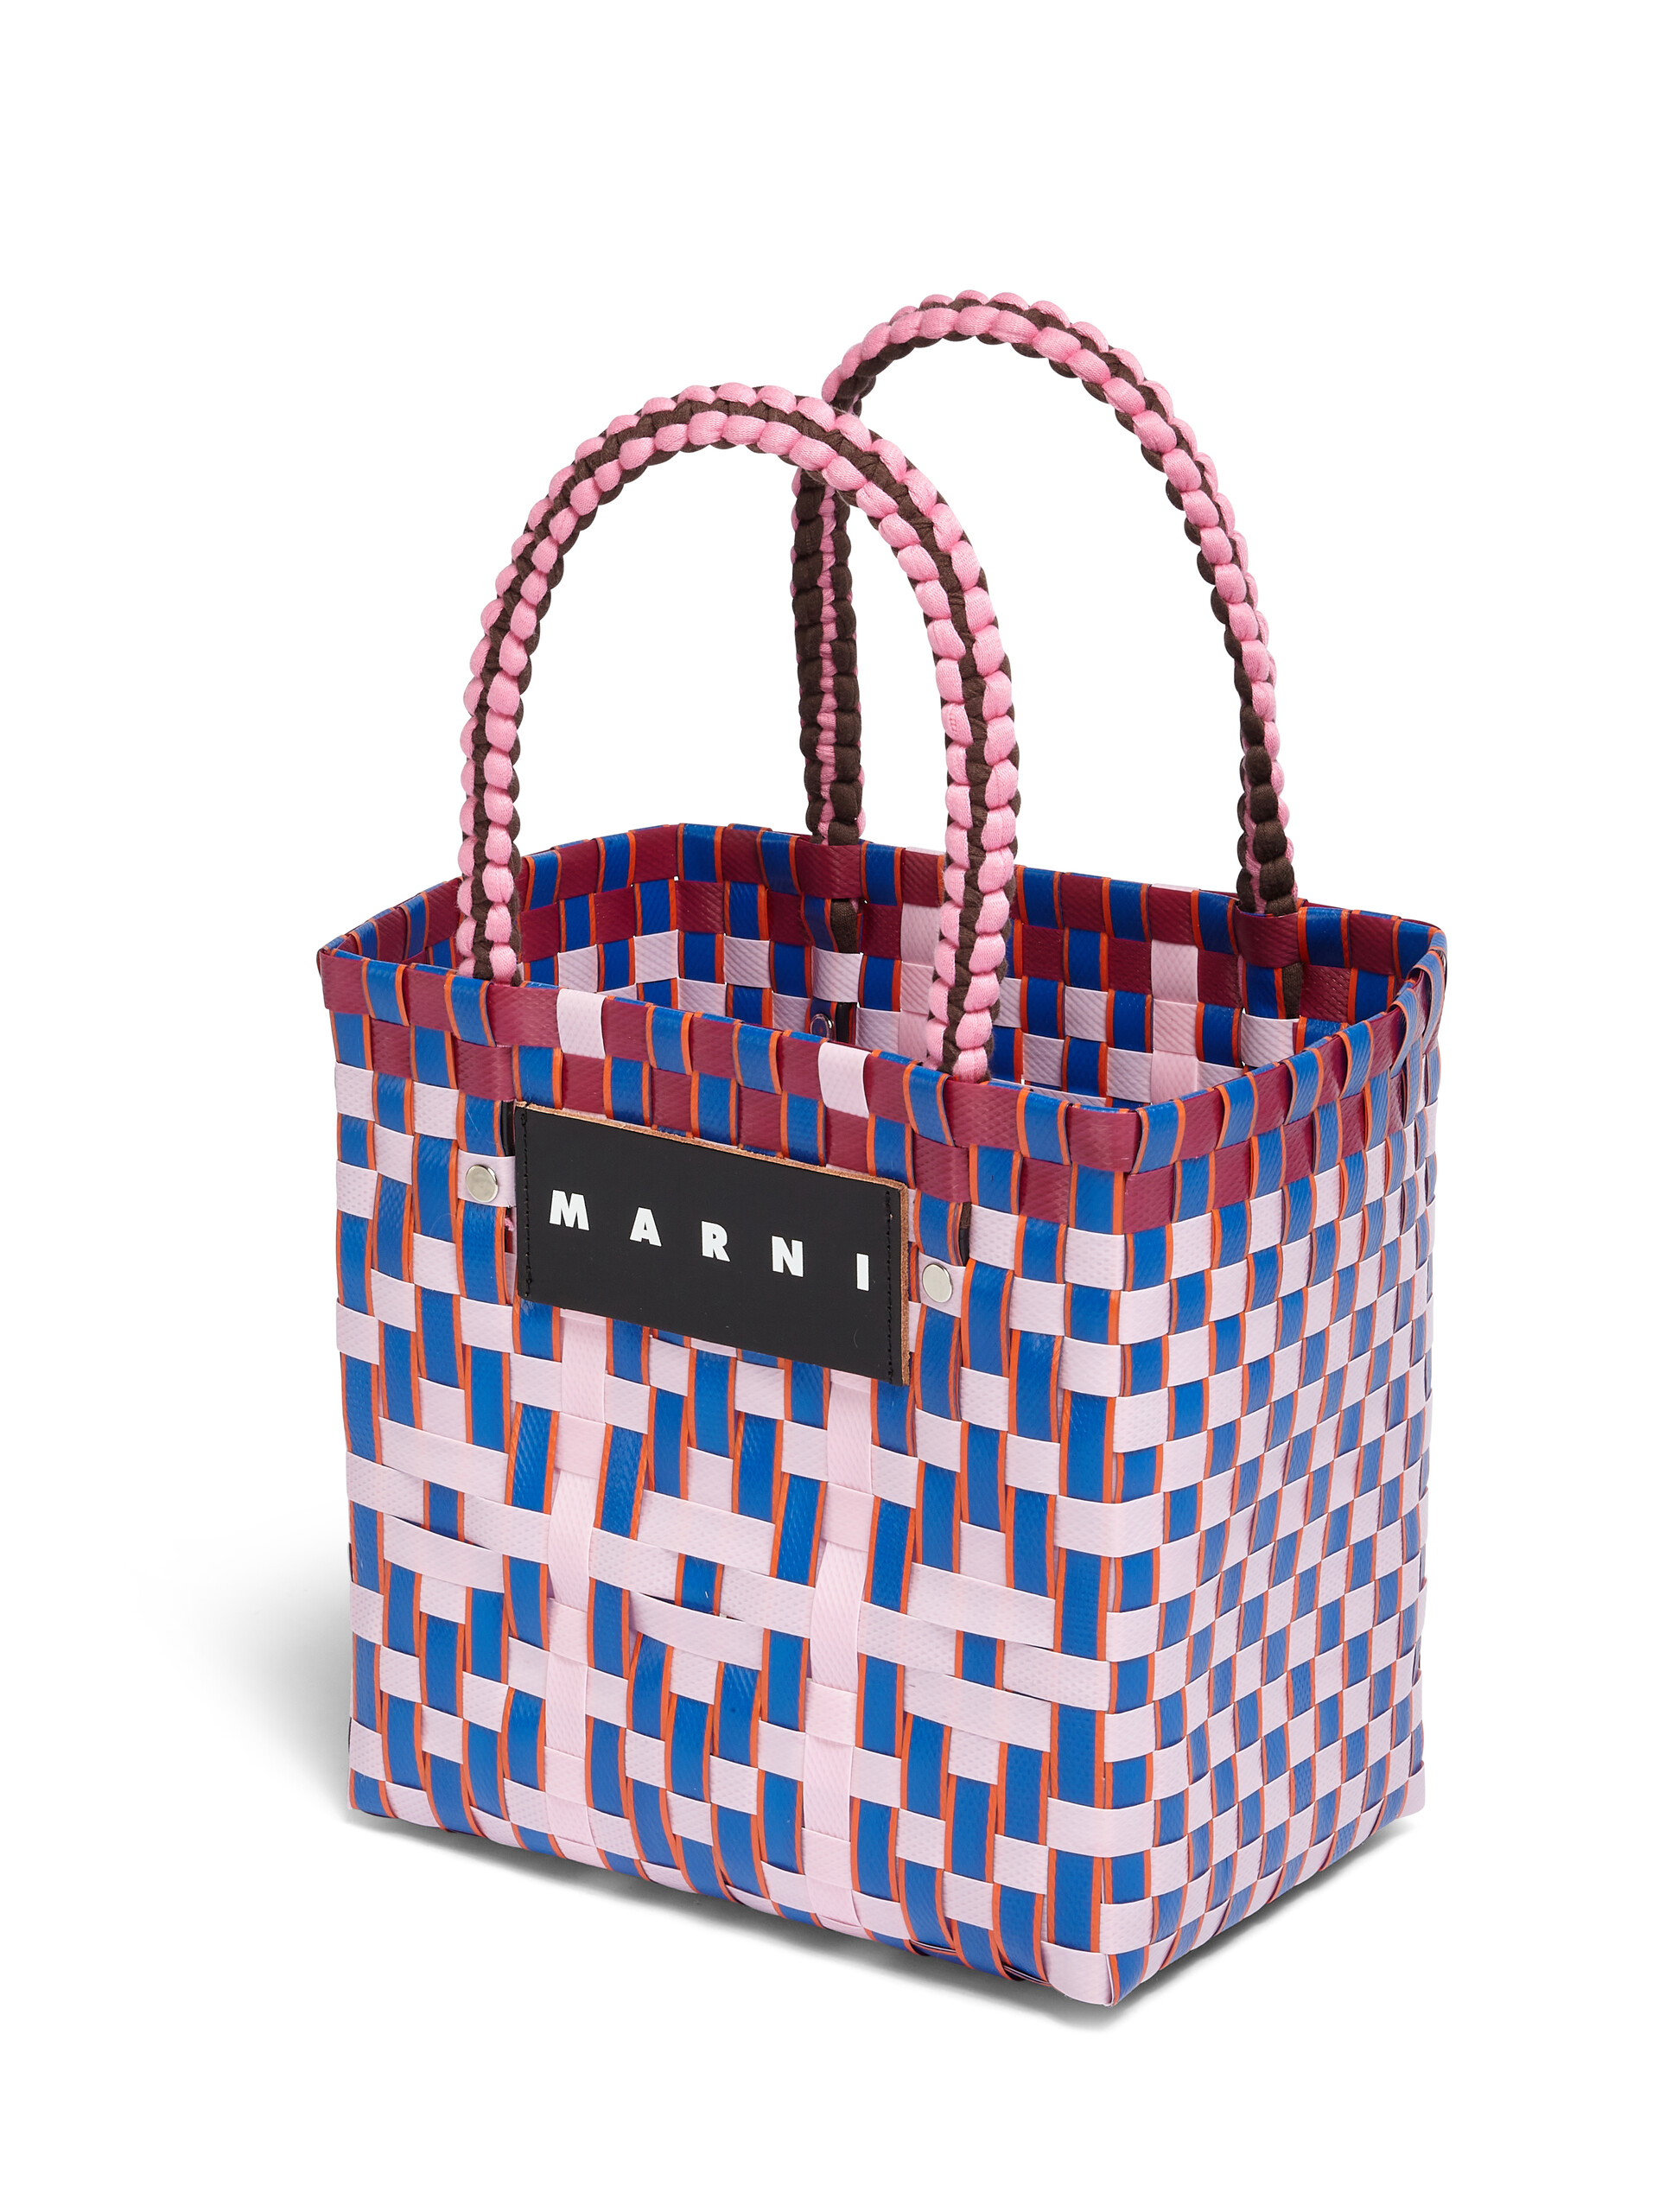 MARNI MARKET BASKET bag in pink diamond woven material - Bags - Image 4